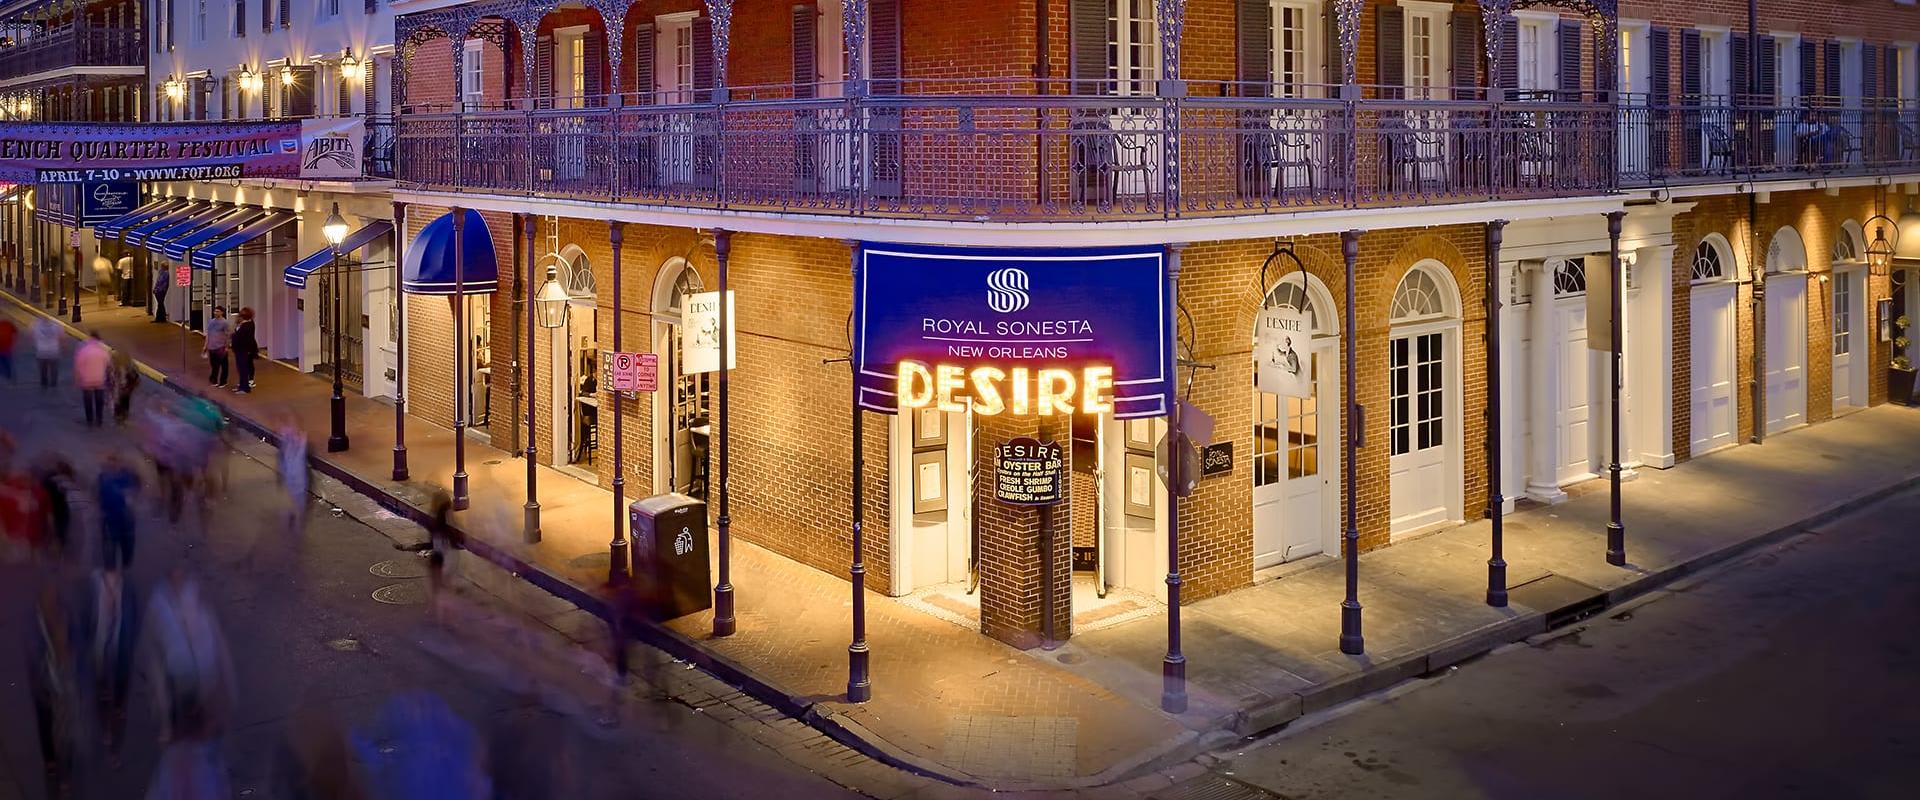 Royal Sonesta New Orleans Desire Corner